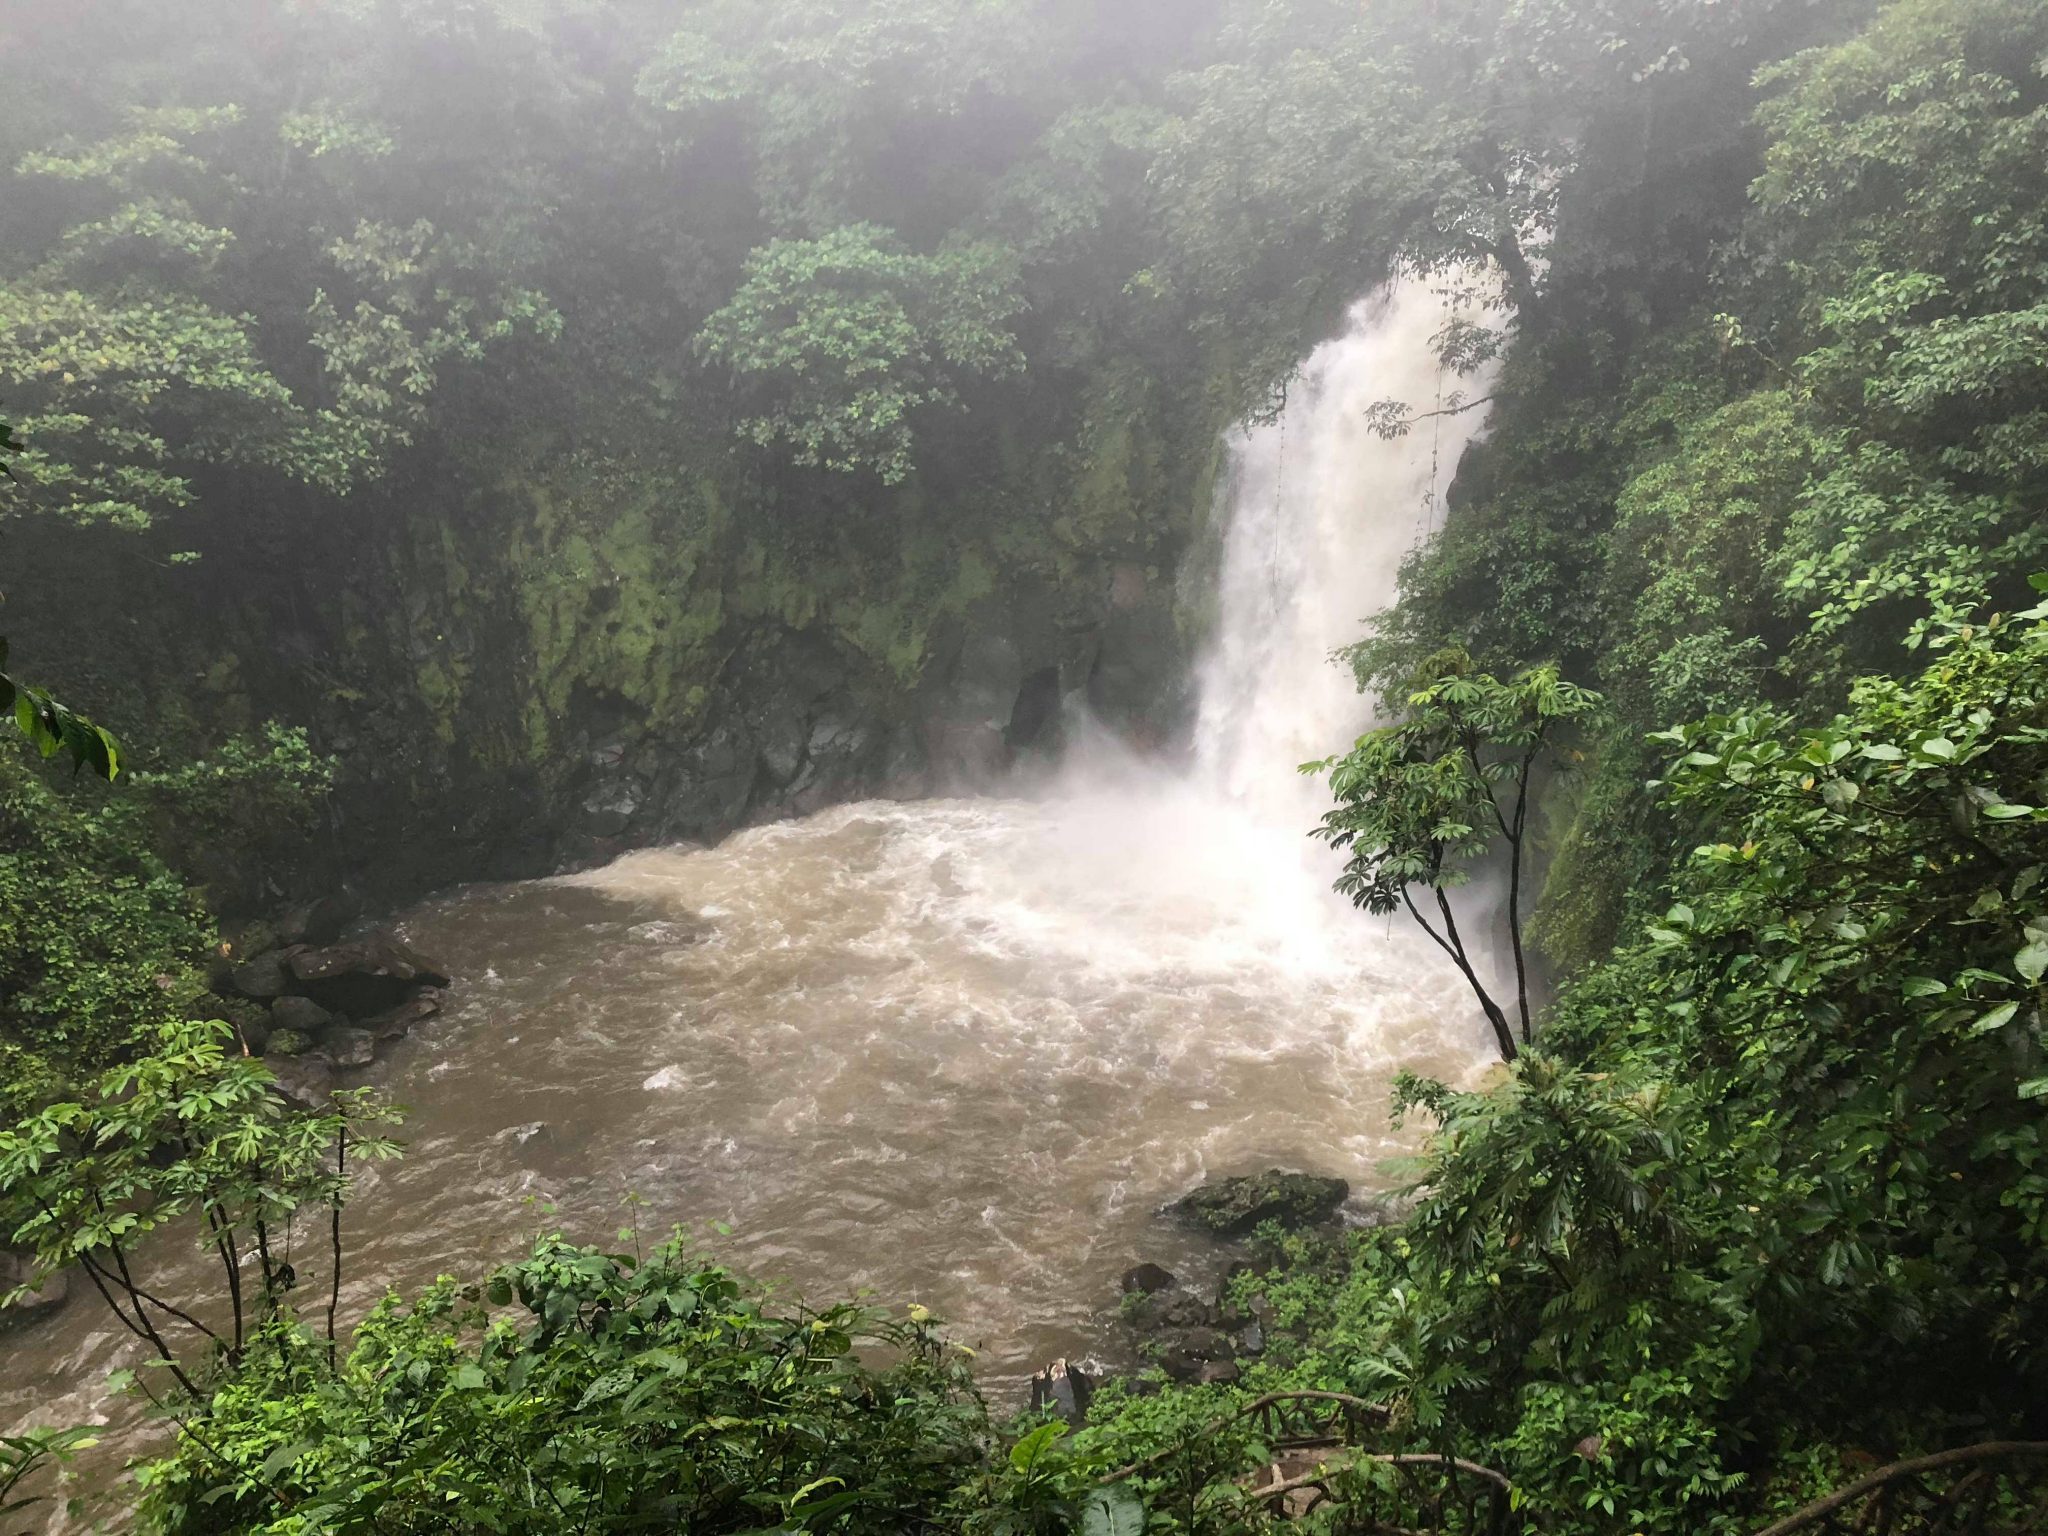 Rio Celeste Costa Rica after a rainfall